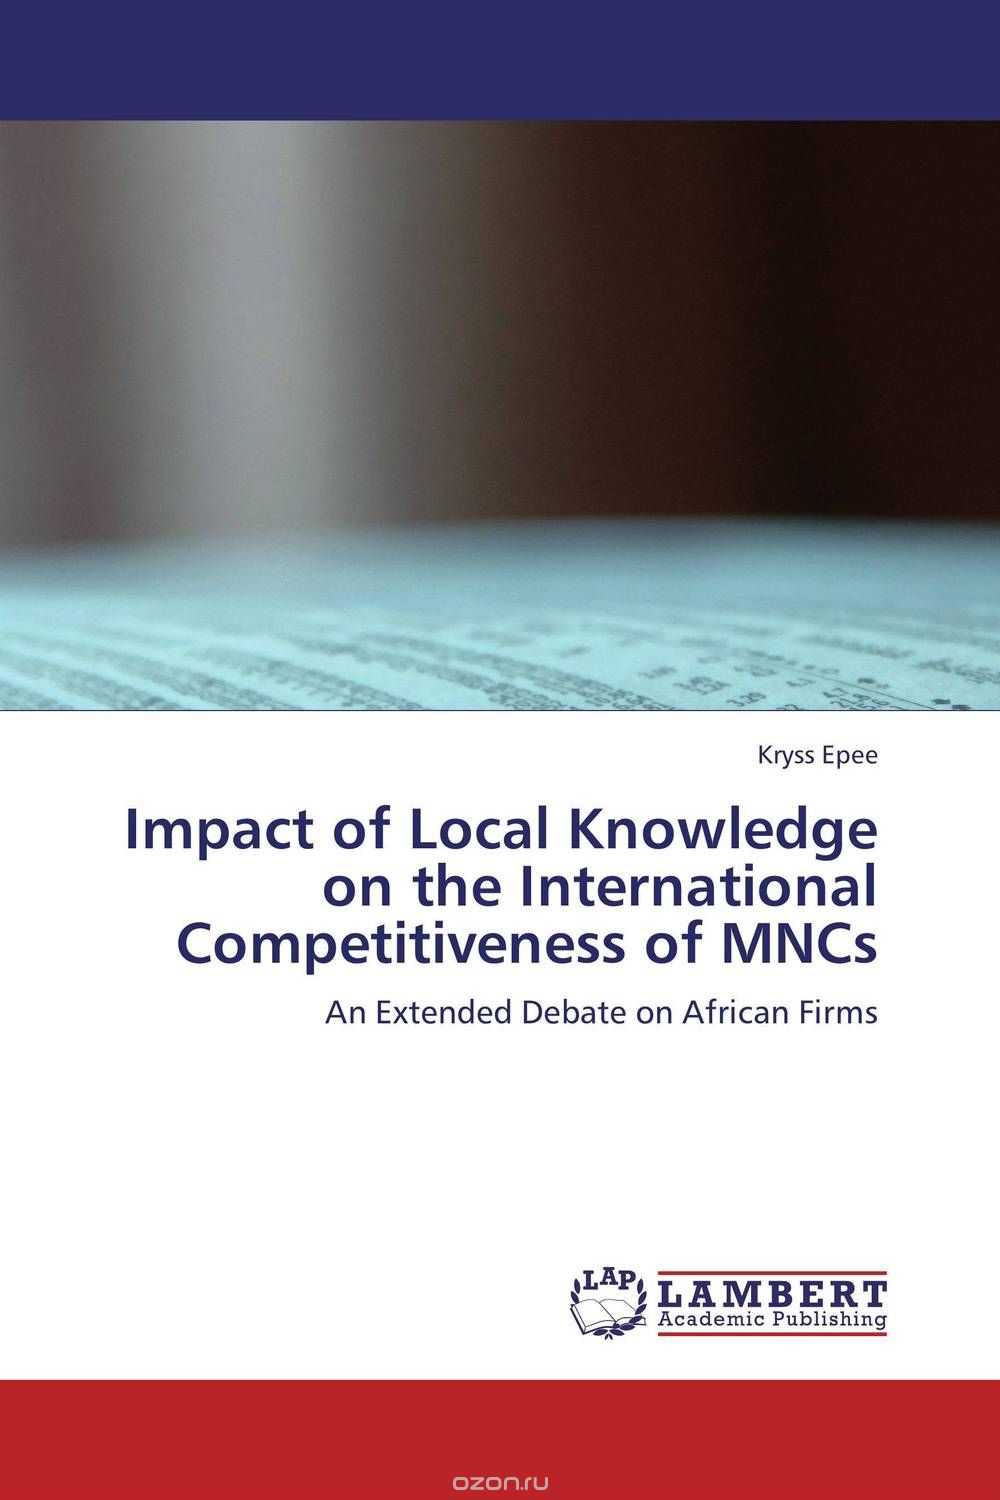 Скачать книгу "Impact of Local Knowledge on the International Competitiveness of MNCs"